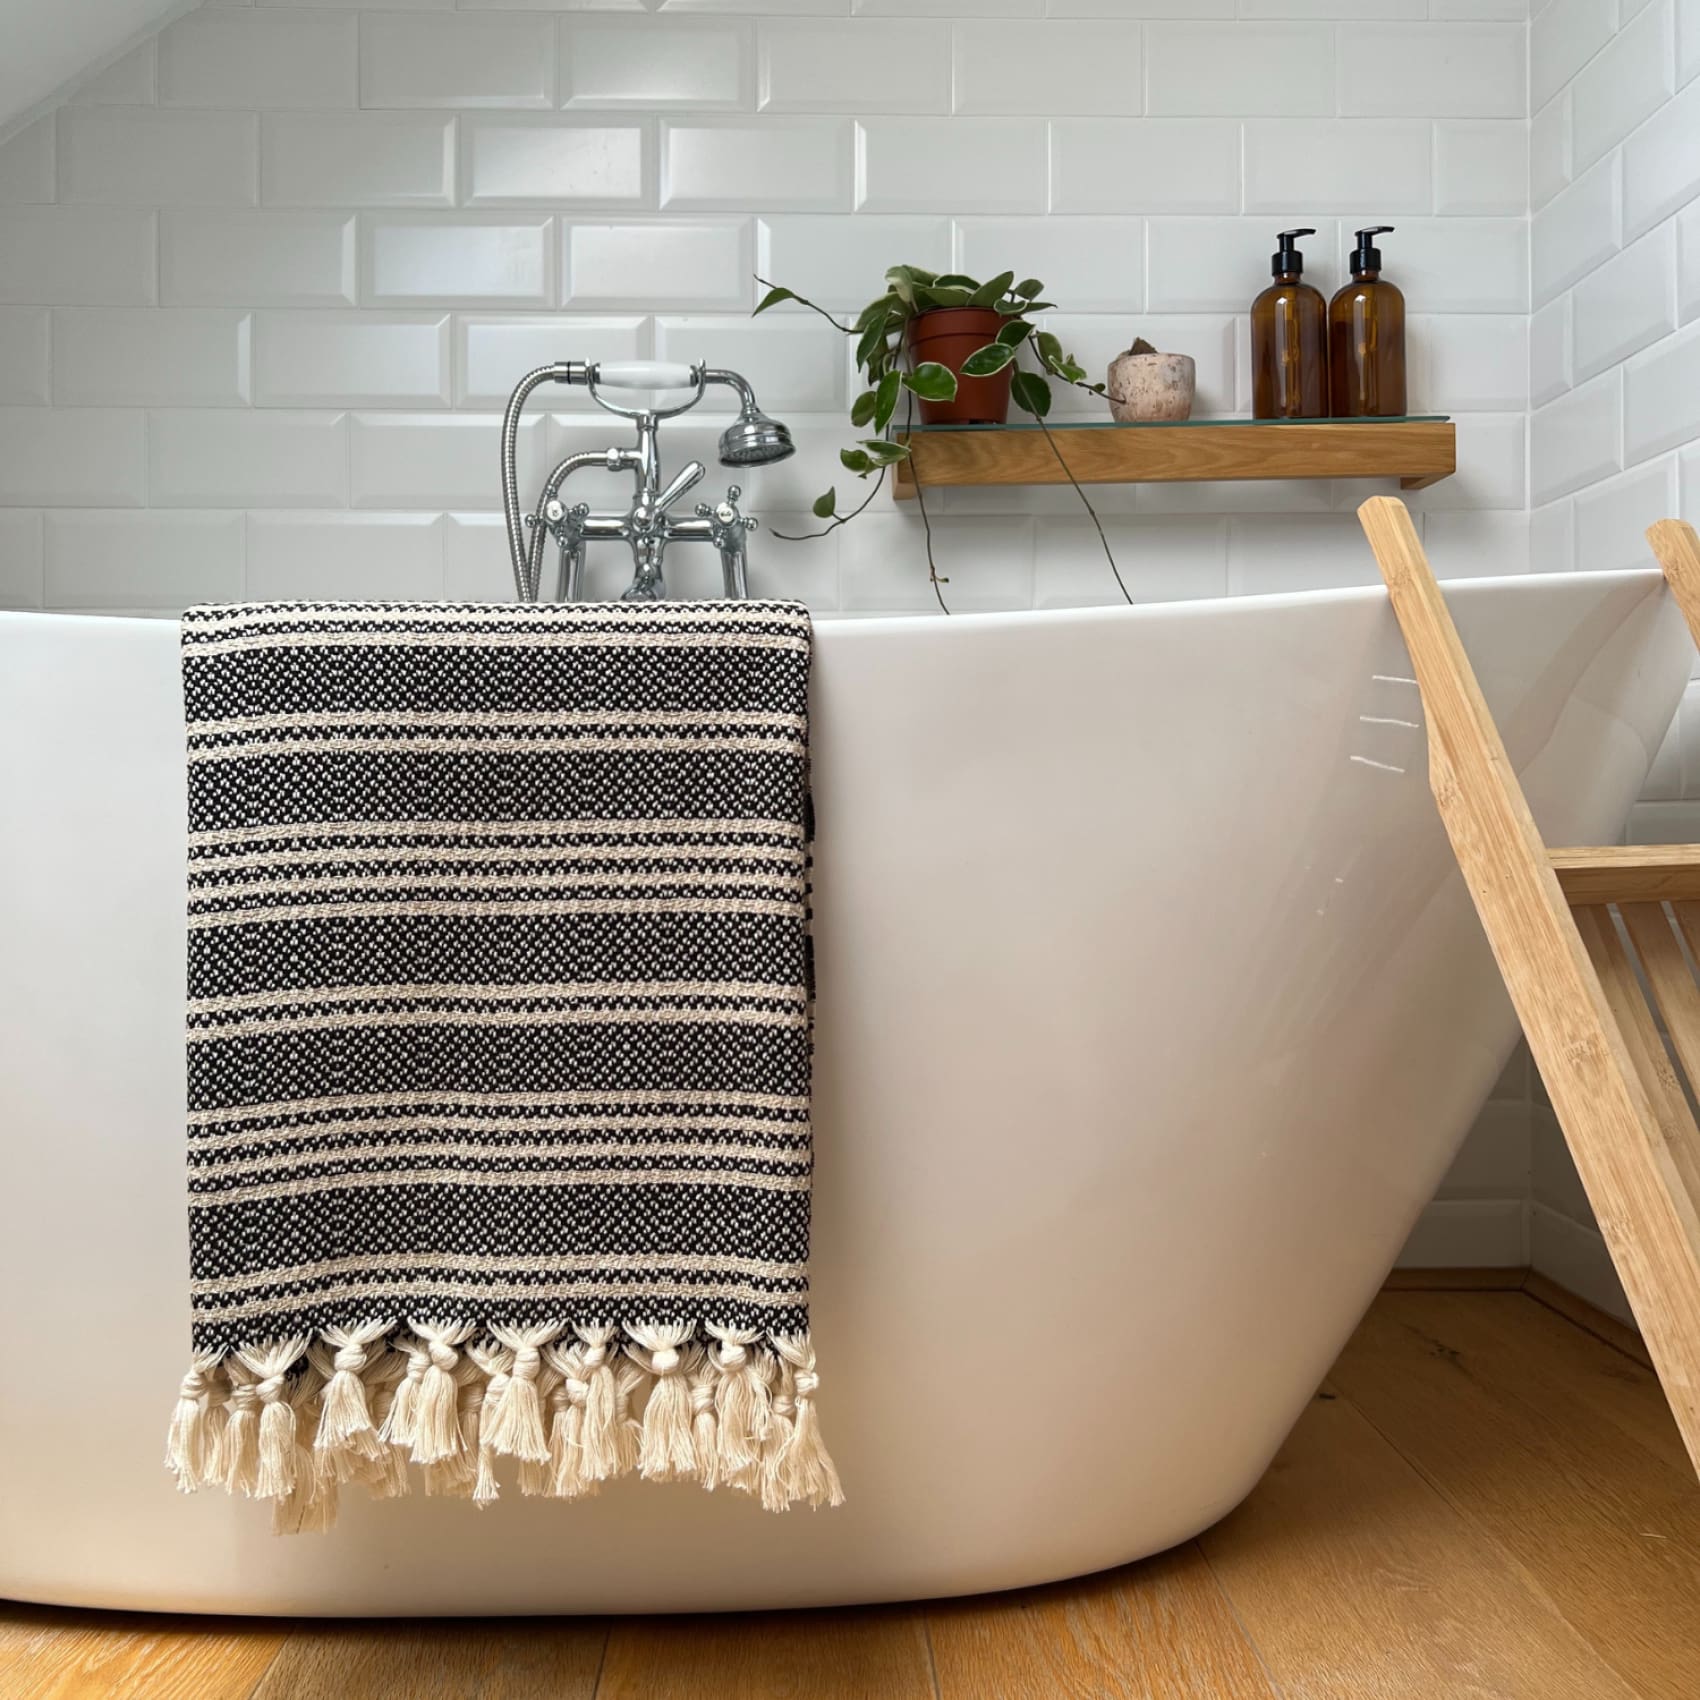 hilmi-extra-thick-cotton-peshtemal-black-bathroom-blanket-luks-linen-tap-plumbing-fixture-448.jpg